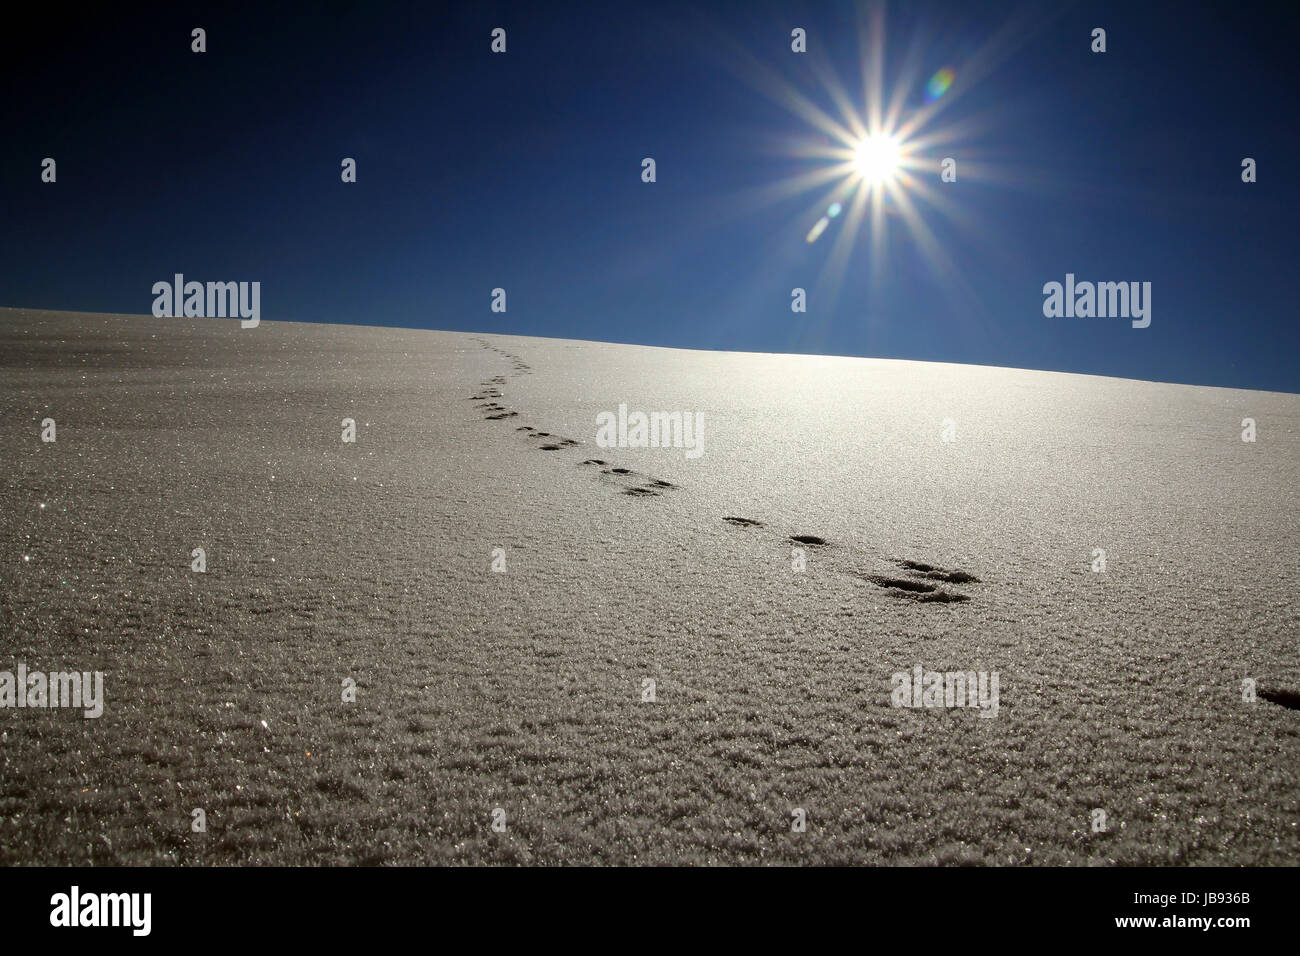 animal tracks in the snow Stock Photo